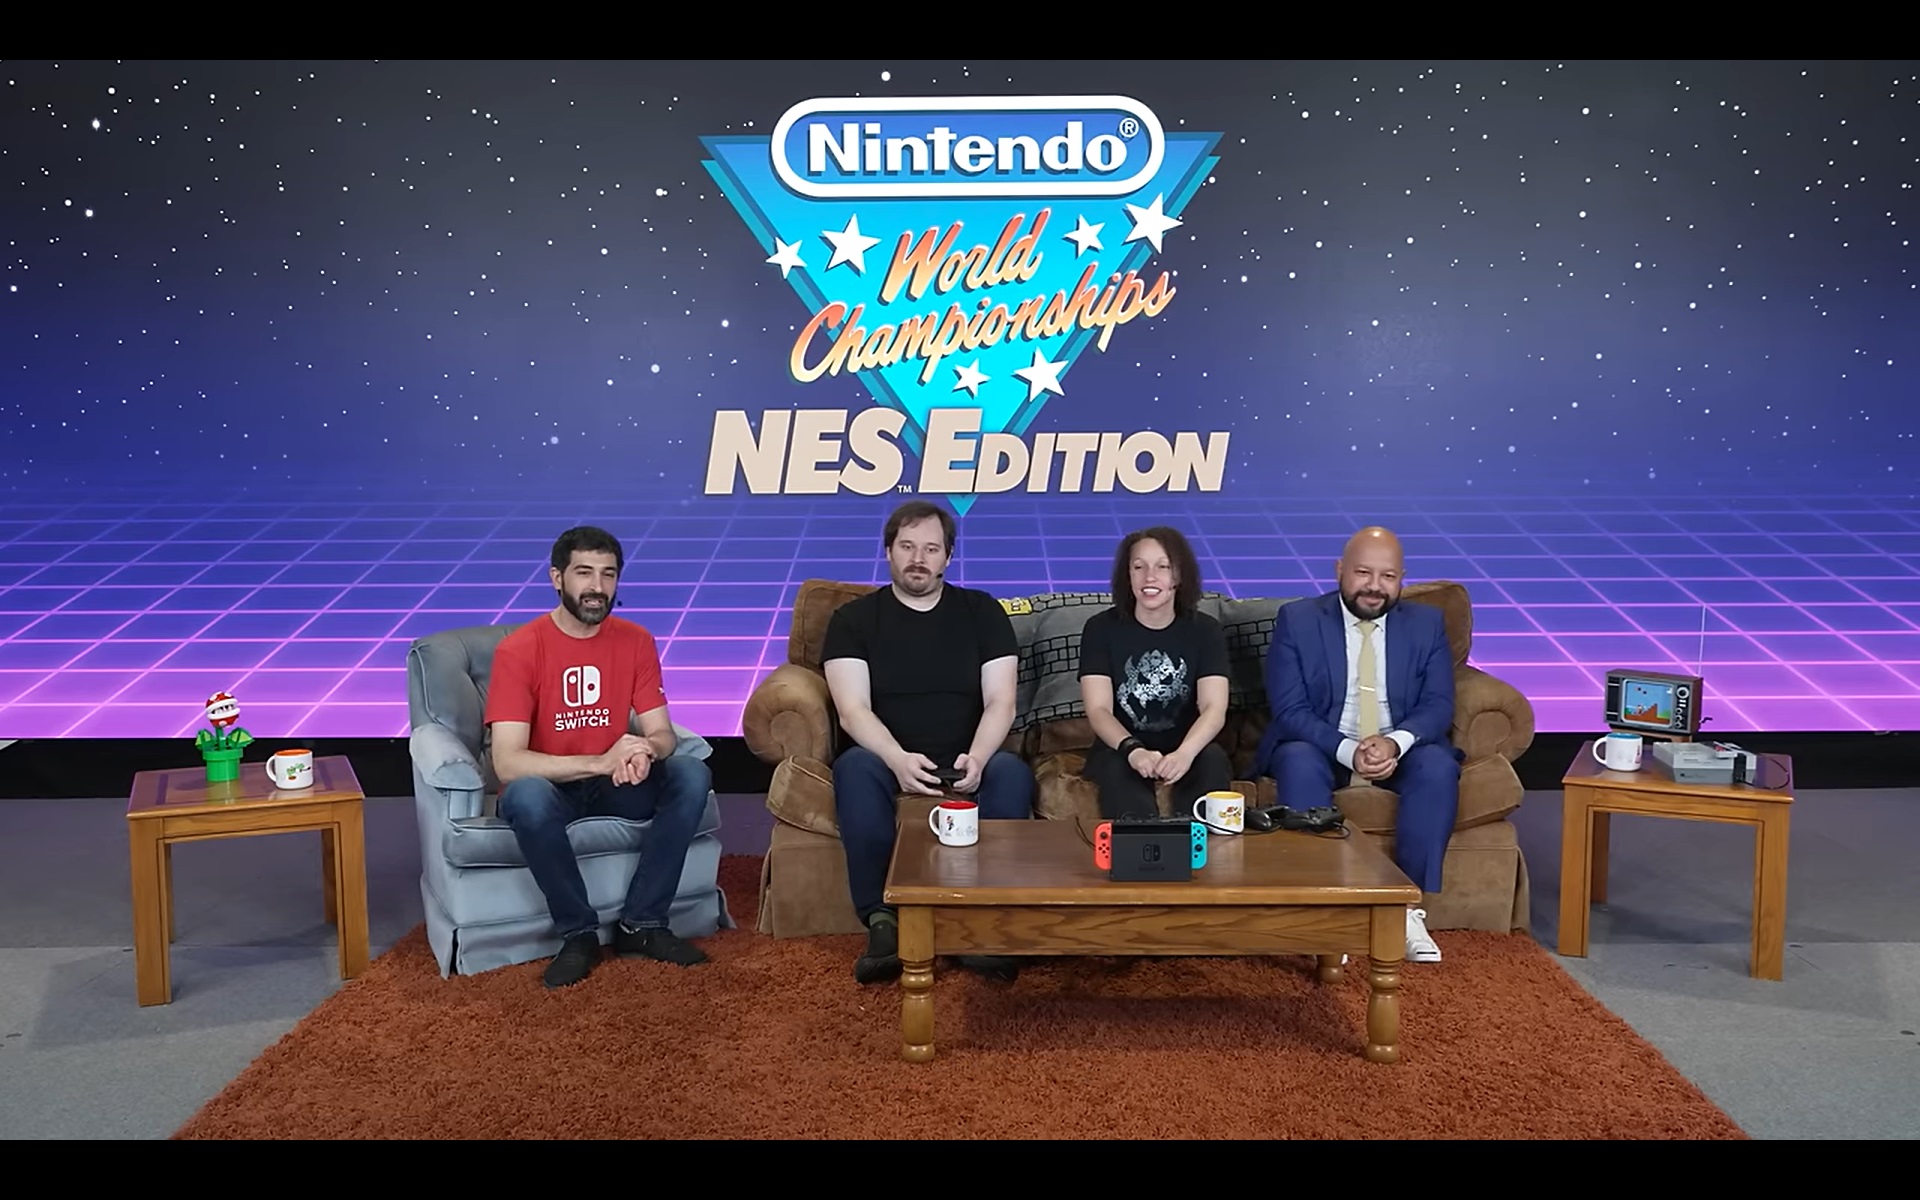 Nintendo Treehouse Nintendo World Championships NES Edition